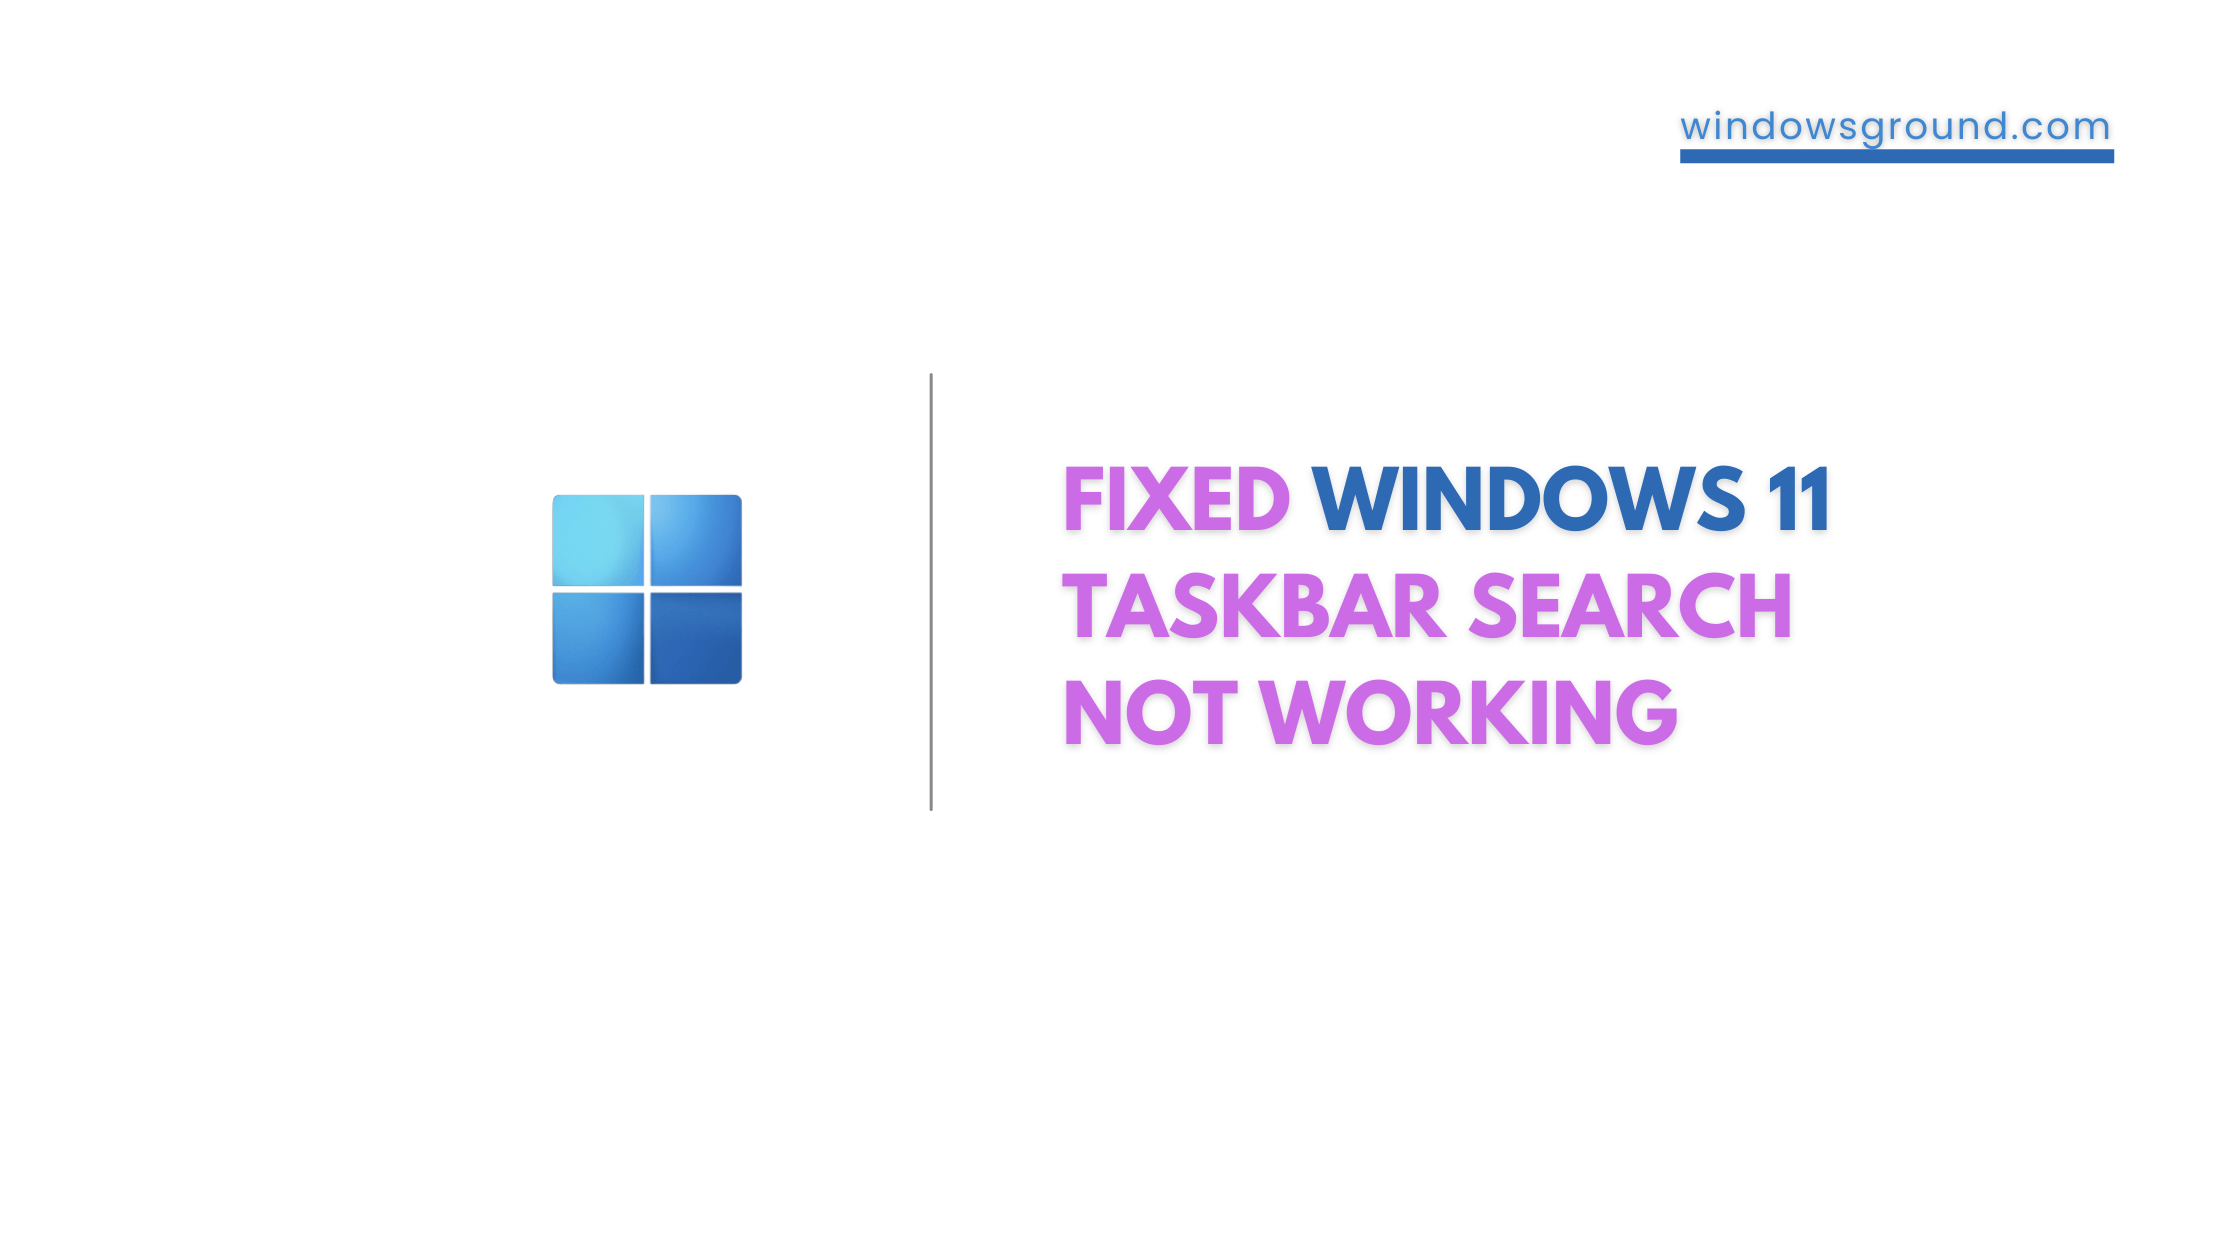 Windows 11 taskbar search not working fixed